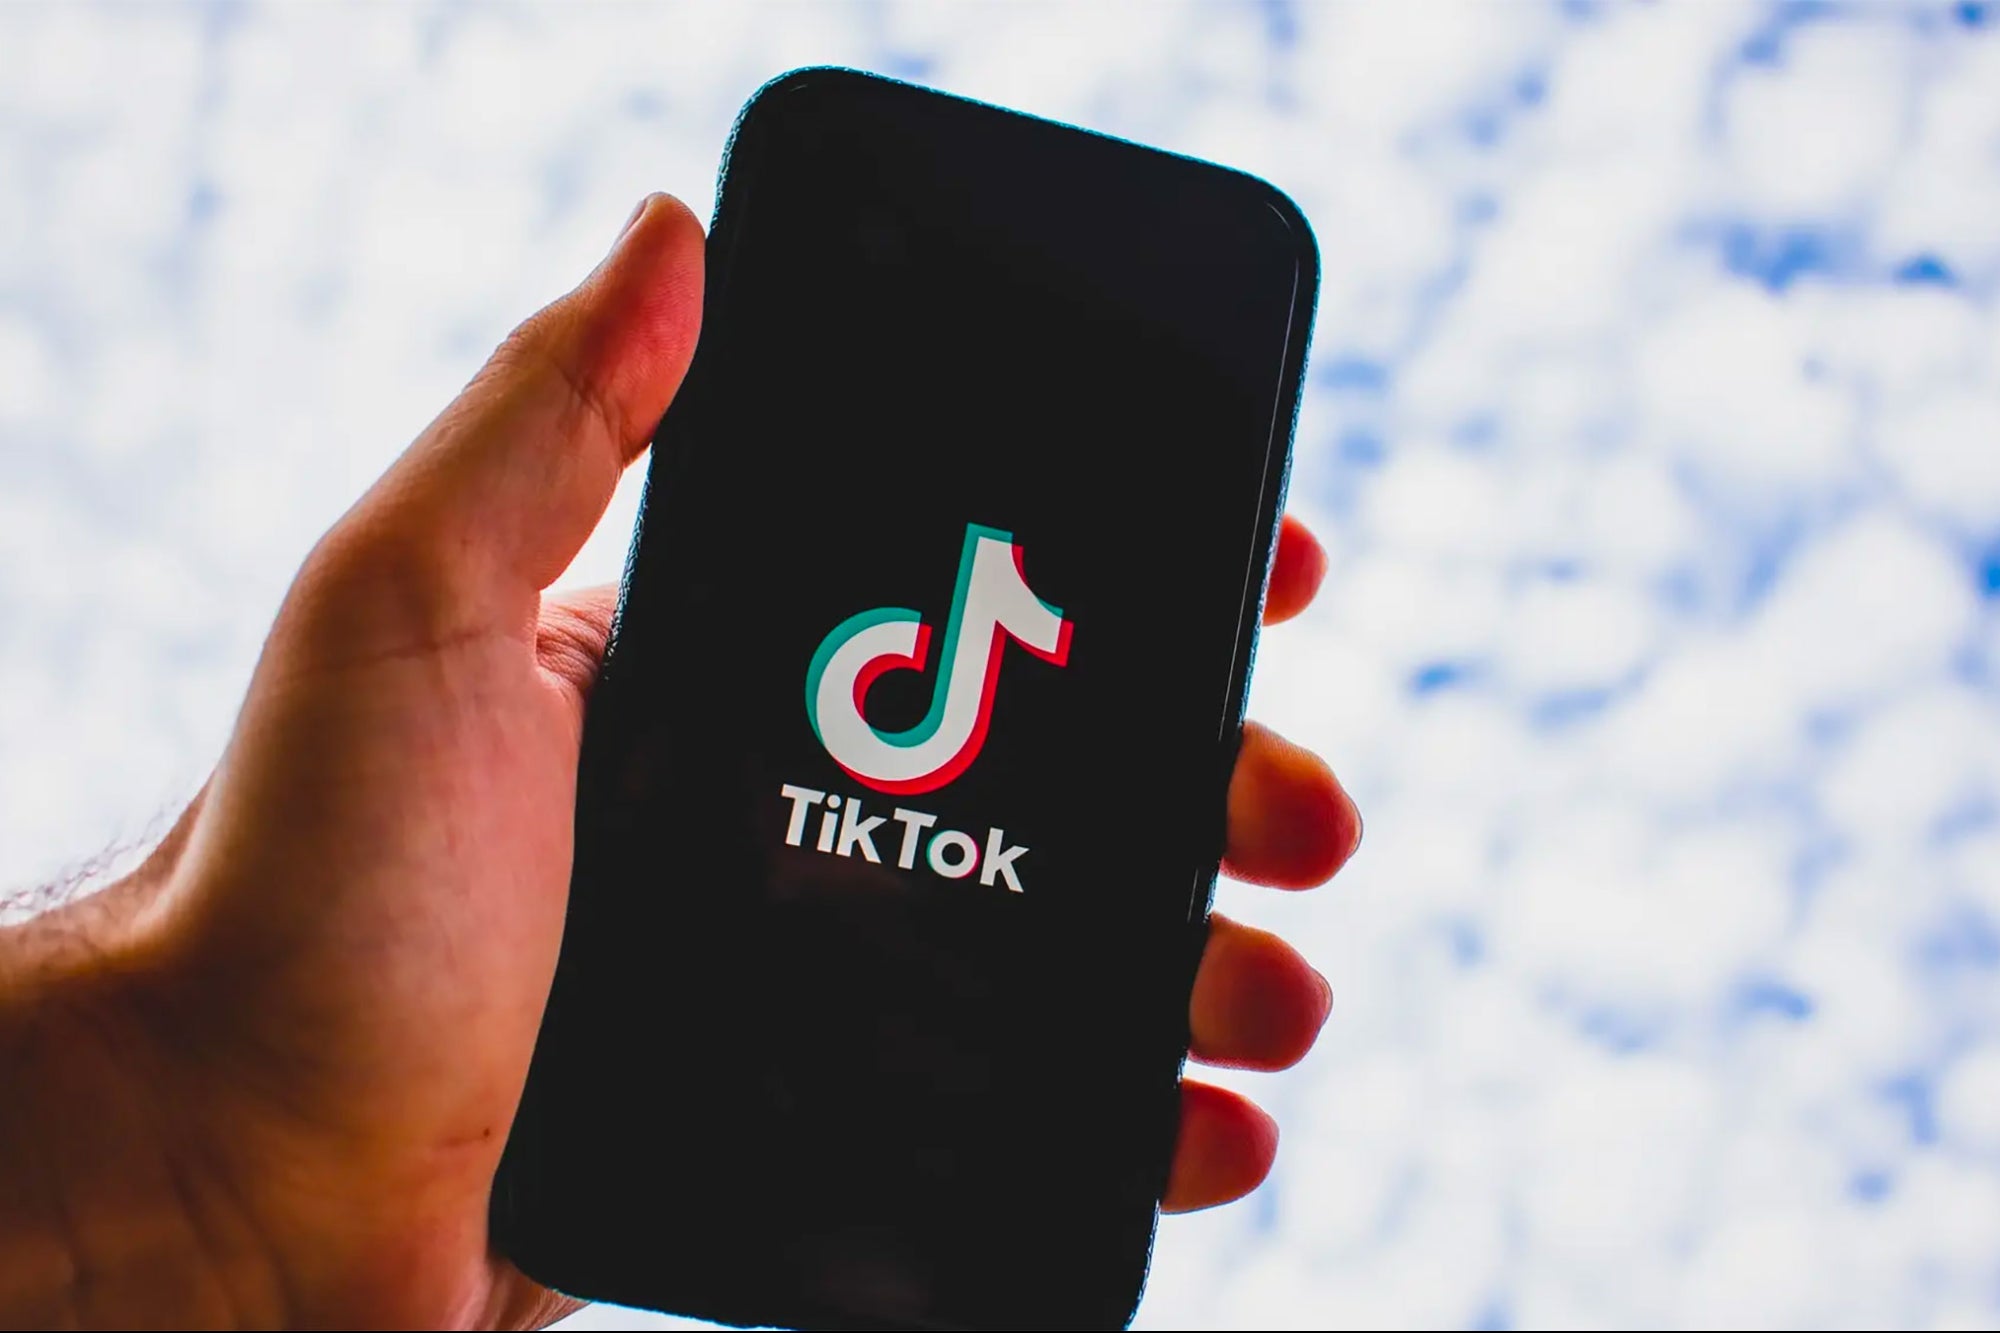 How to upload videos on TikTok?